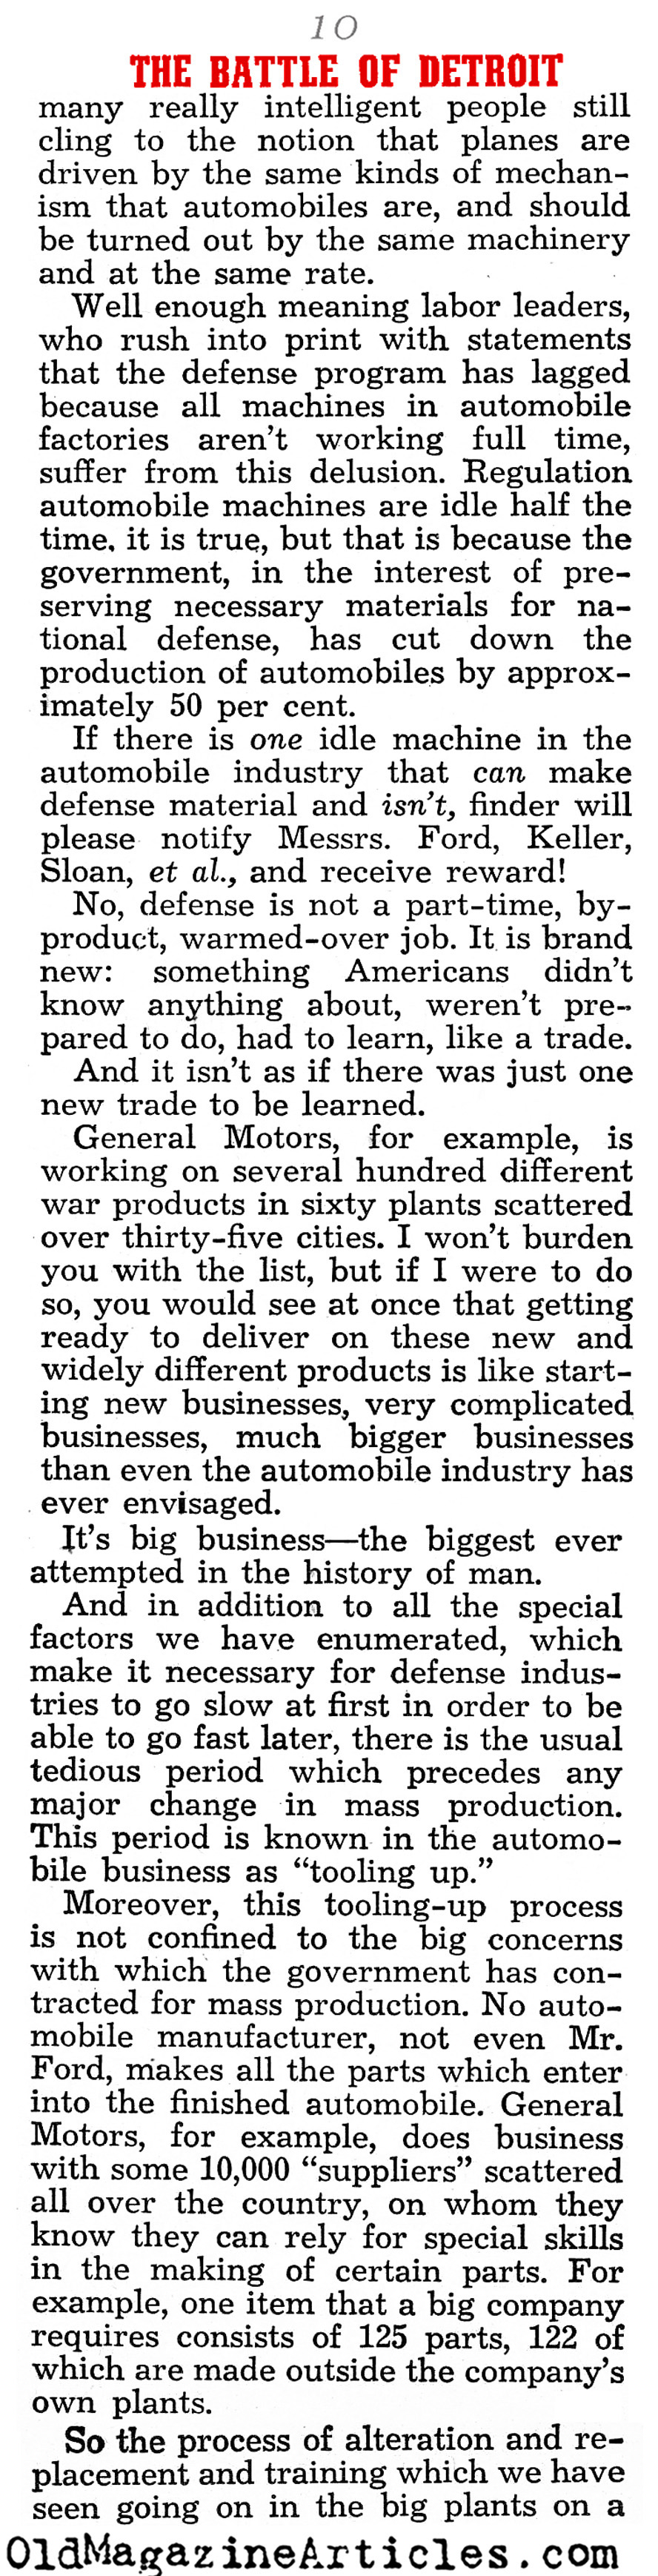 The Importance of Detroit (Liberty Magazine, 1942)